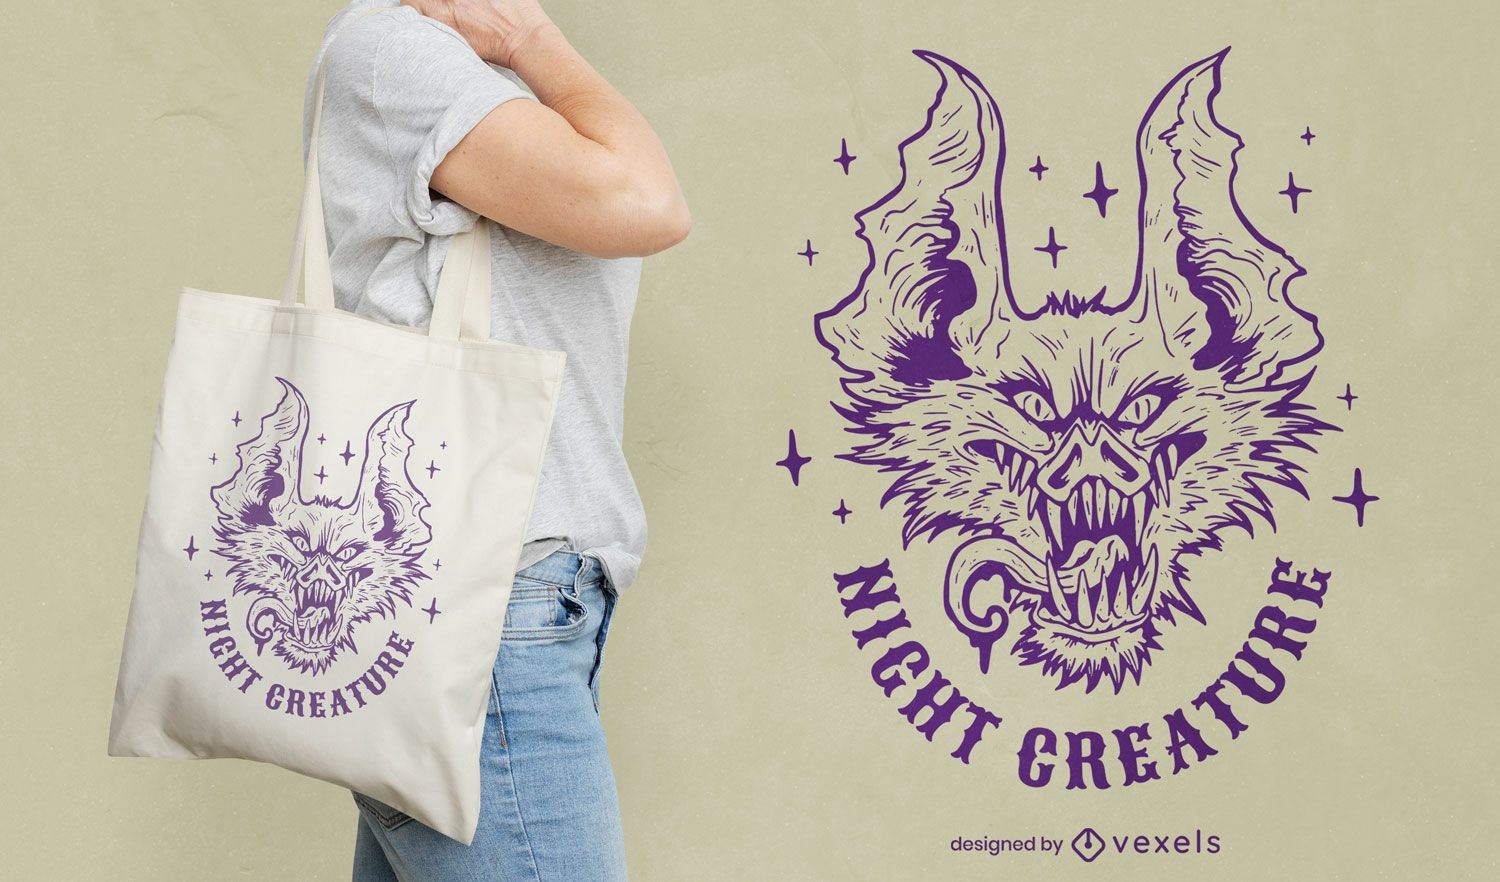 Scary night creature tote bag design